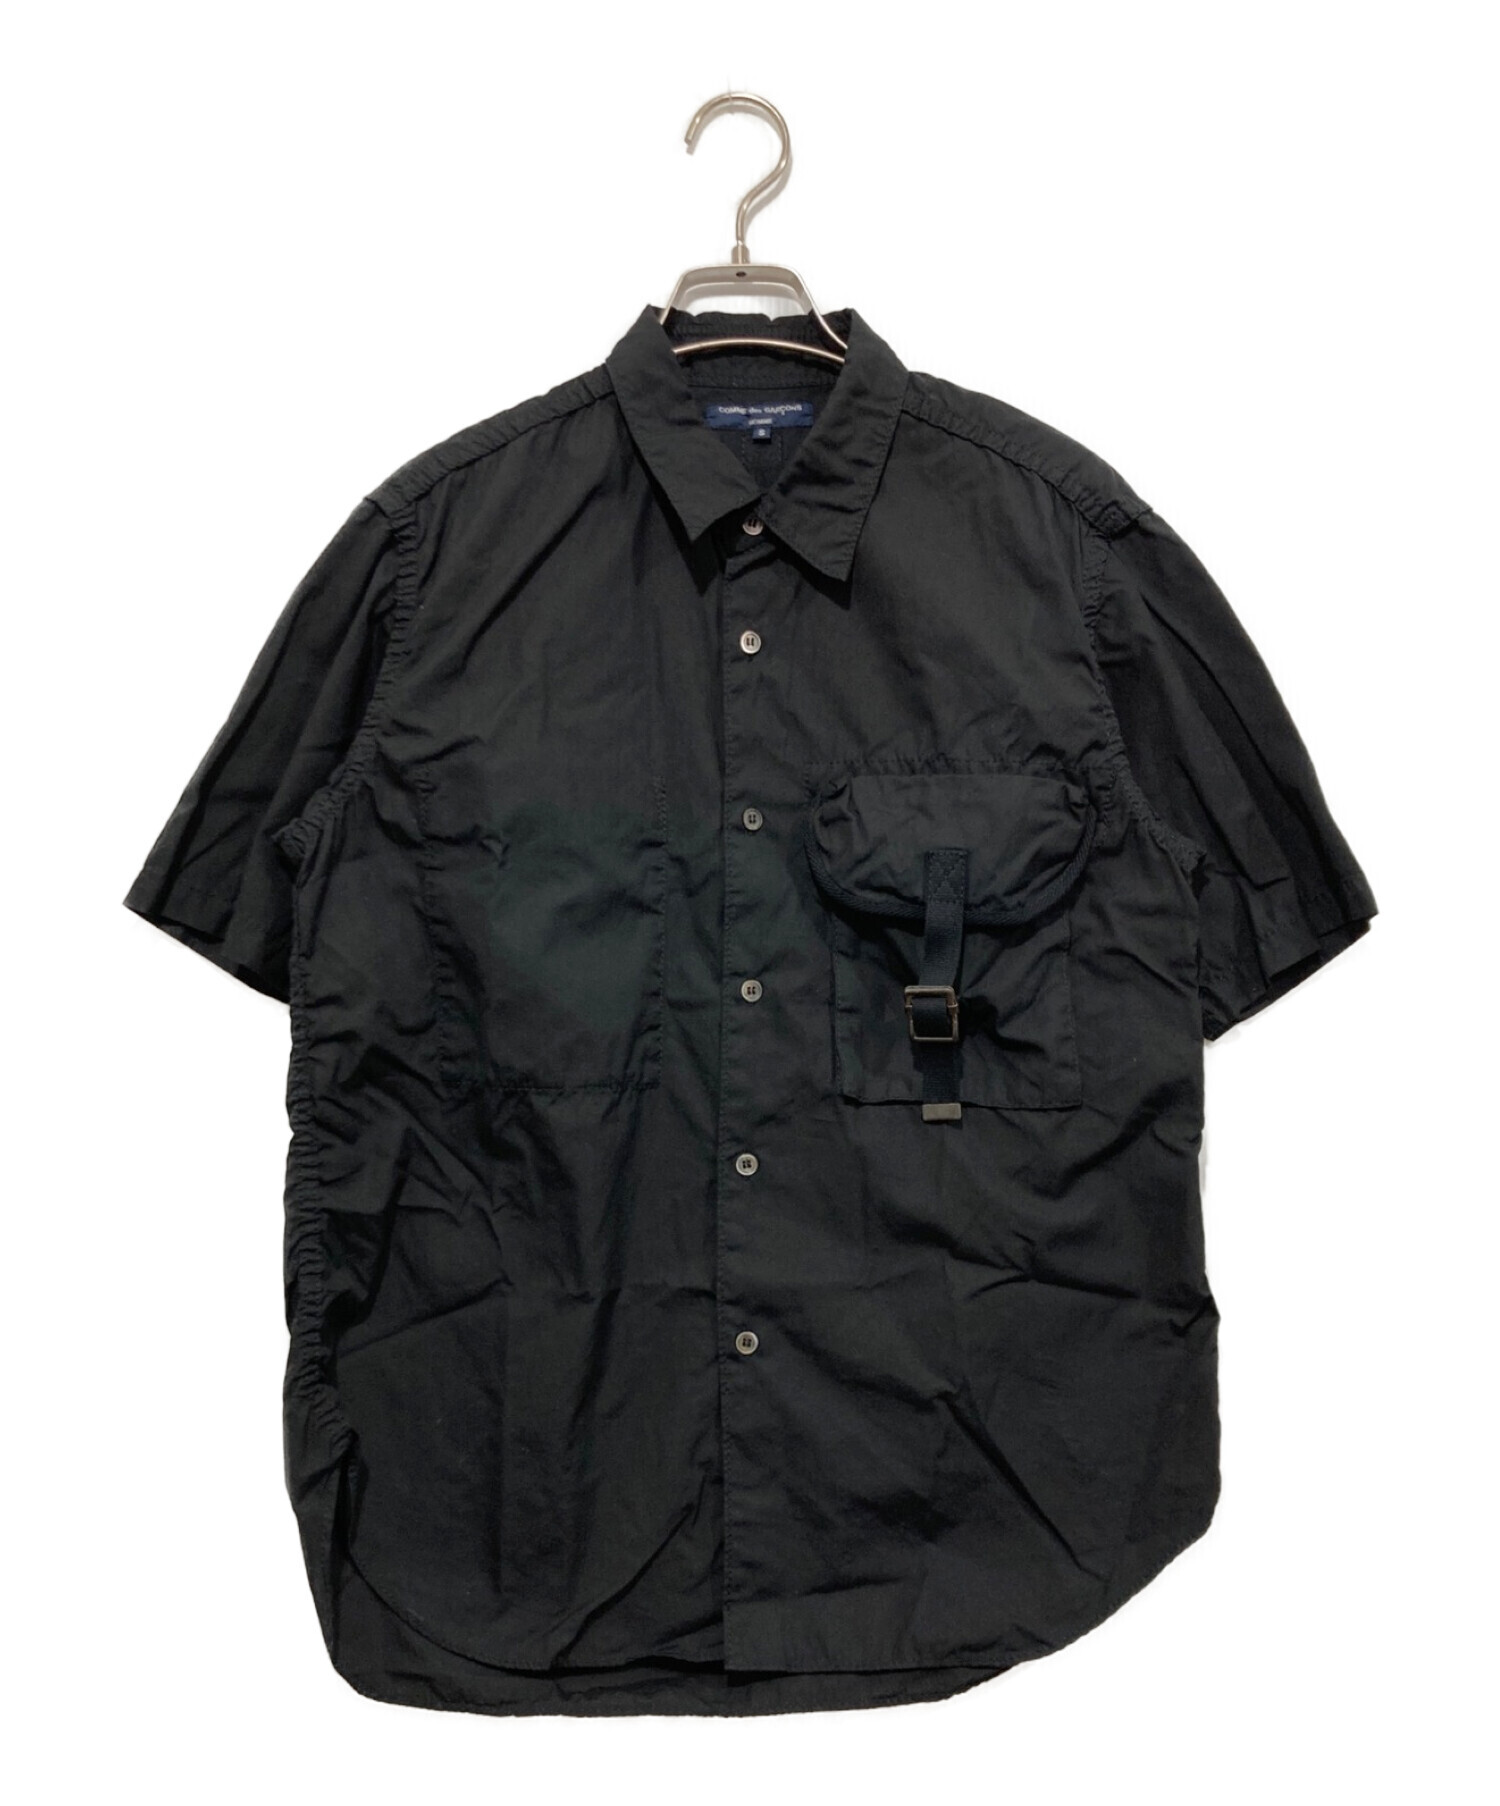 COMME des GARCONS HOMME (コムデギャルソン オム) 製品染めパッカリング半袖シャツ ブラック サイズ:S